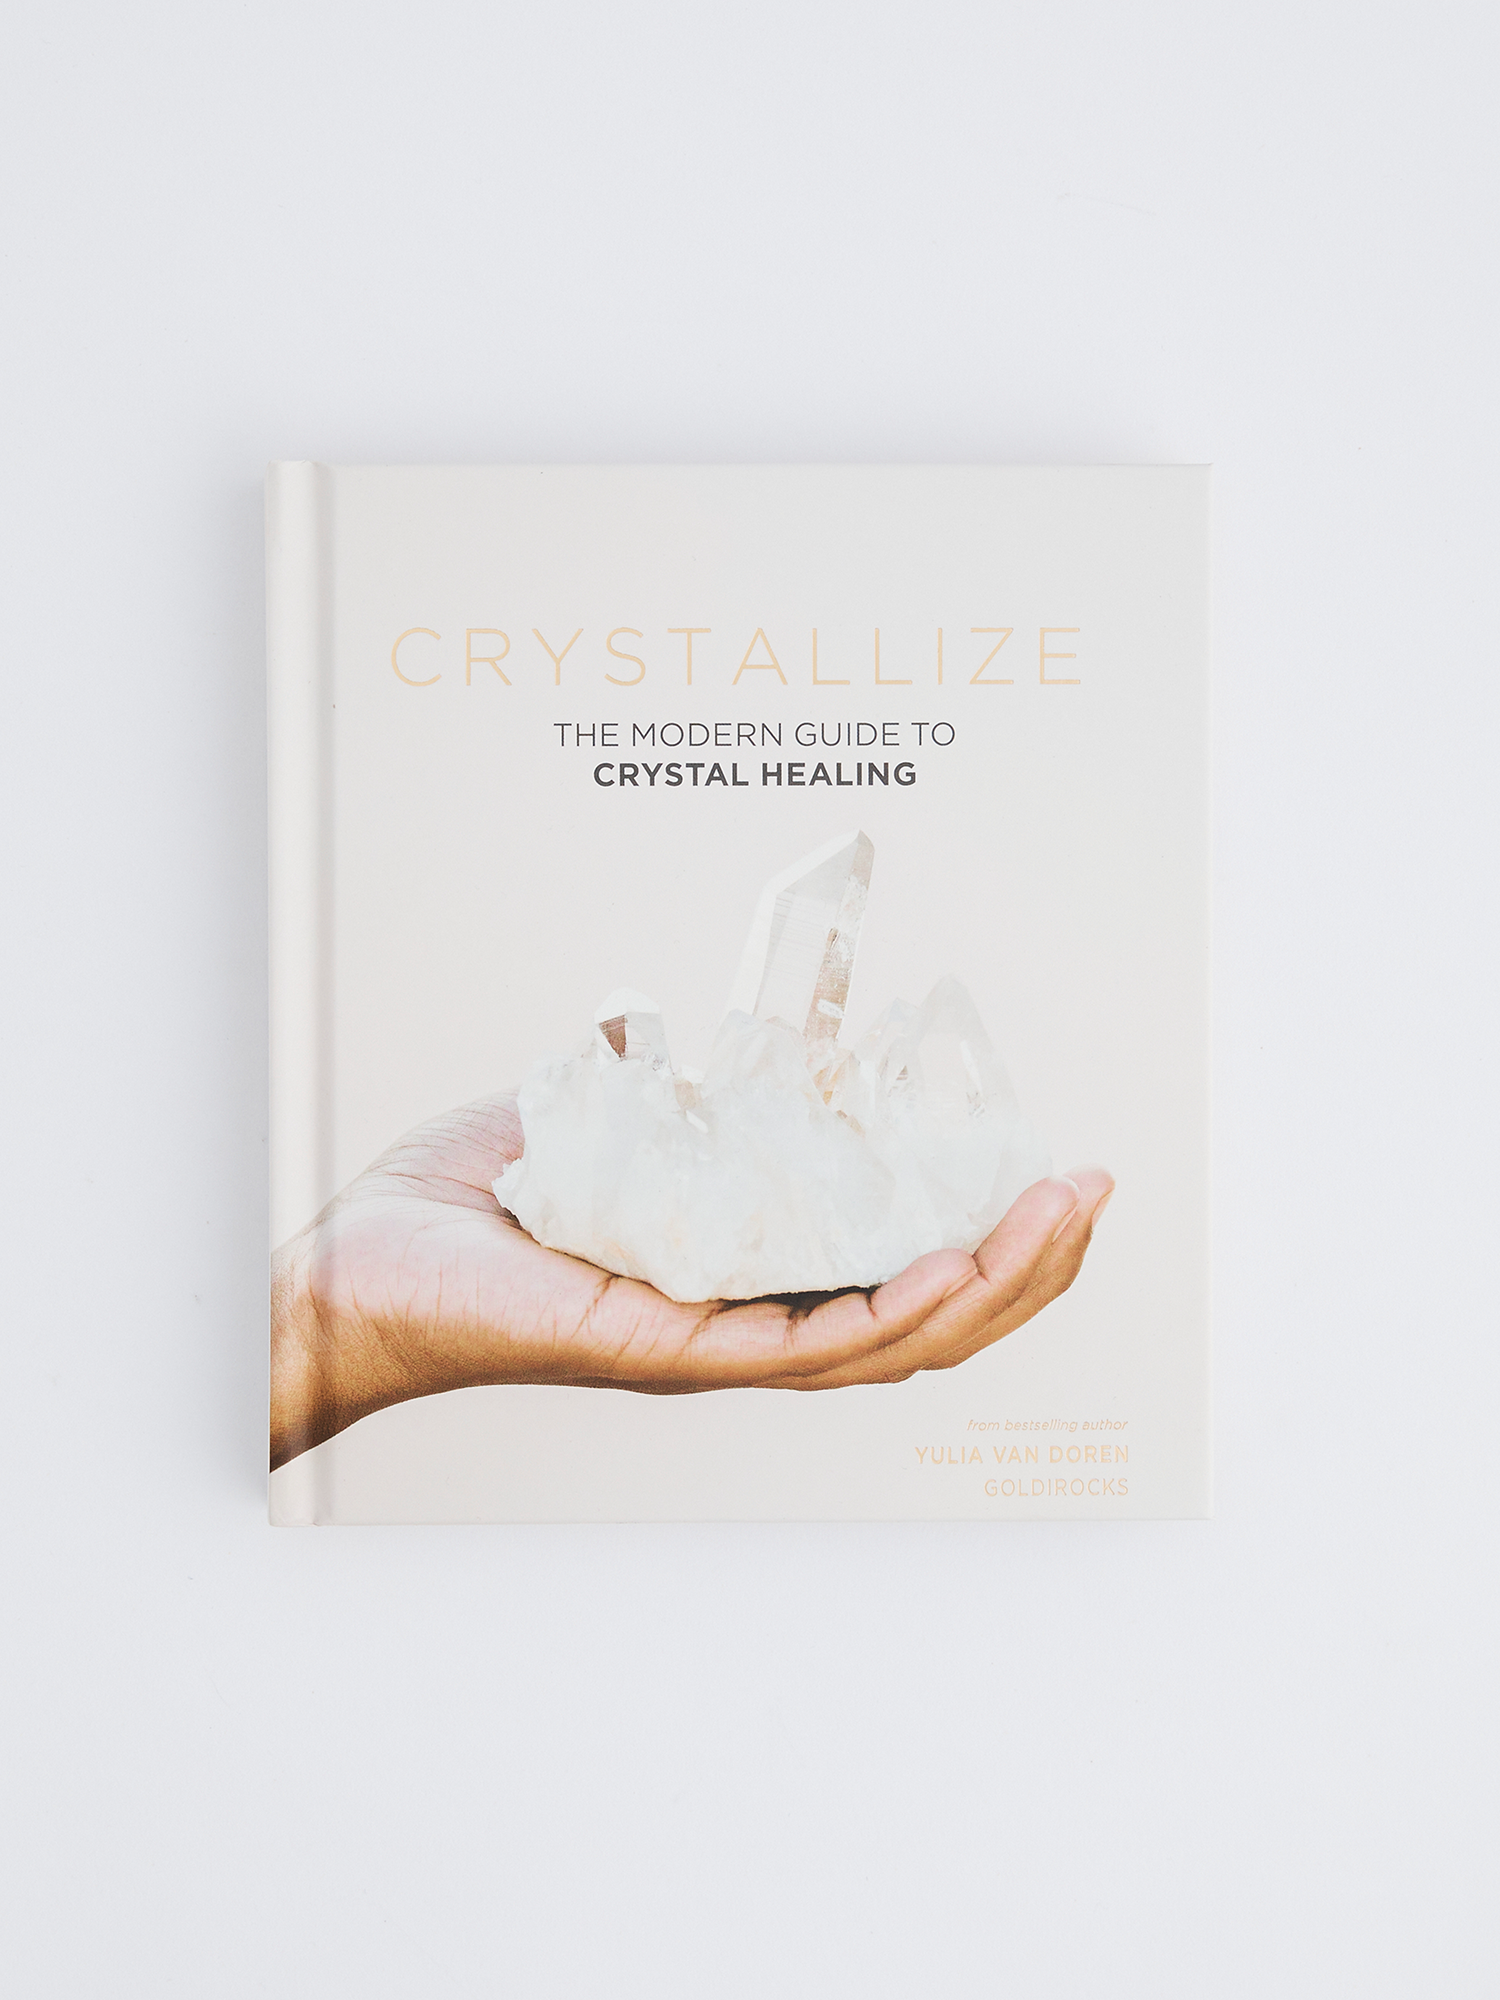 crystallize | yulia van doren